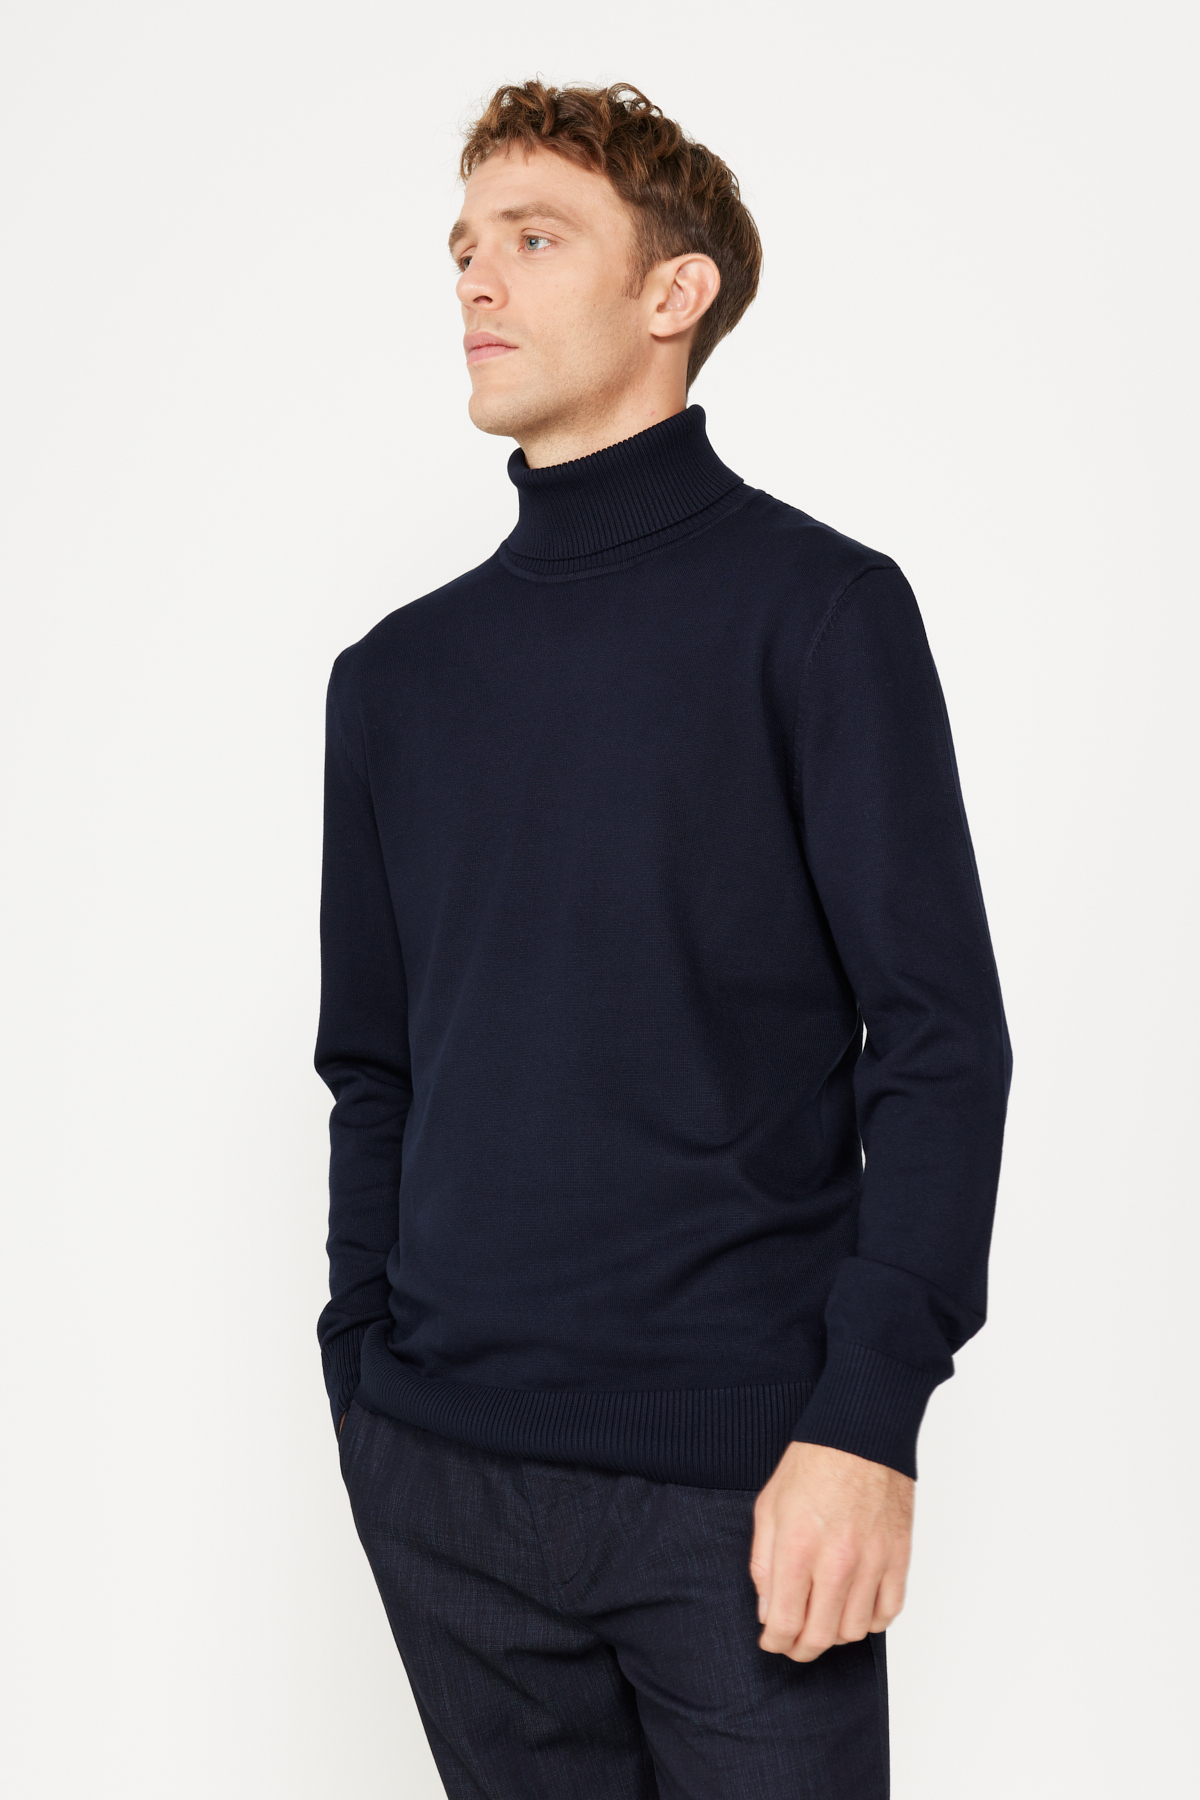 ALTINYILDIZ CLASSICS Men's Navy Blue Standard Fit Regular Cut Full Turtleneck Knitwear Sweater